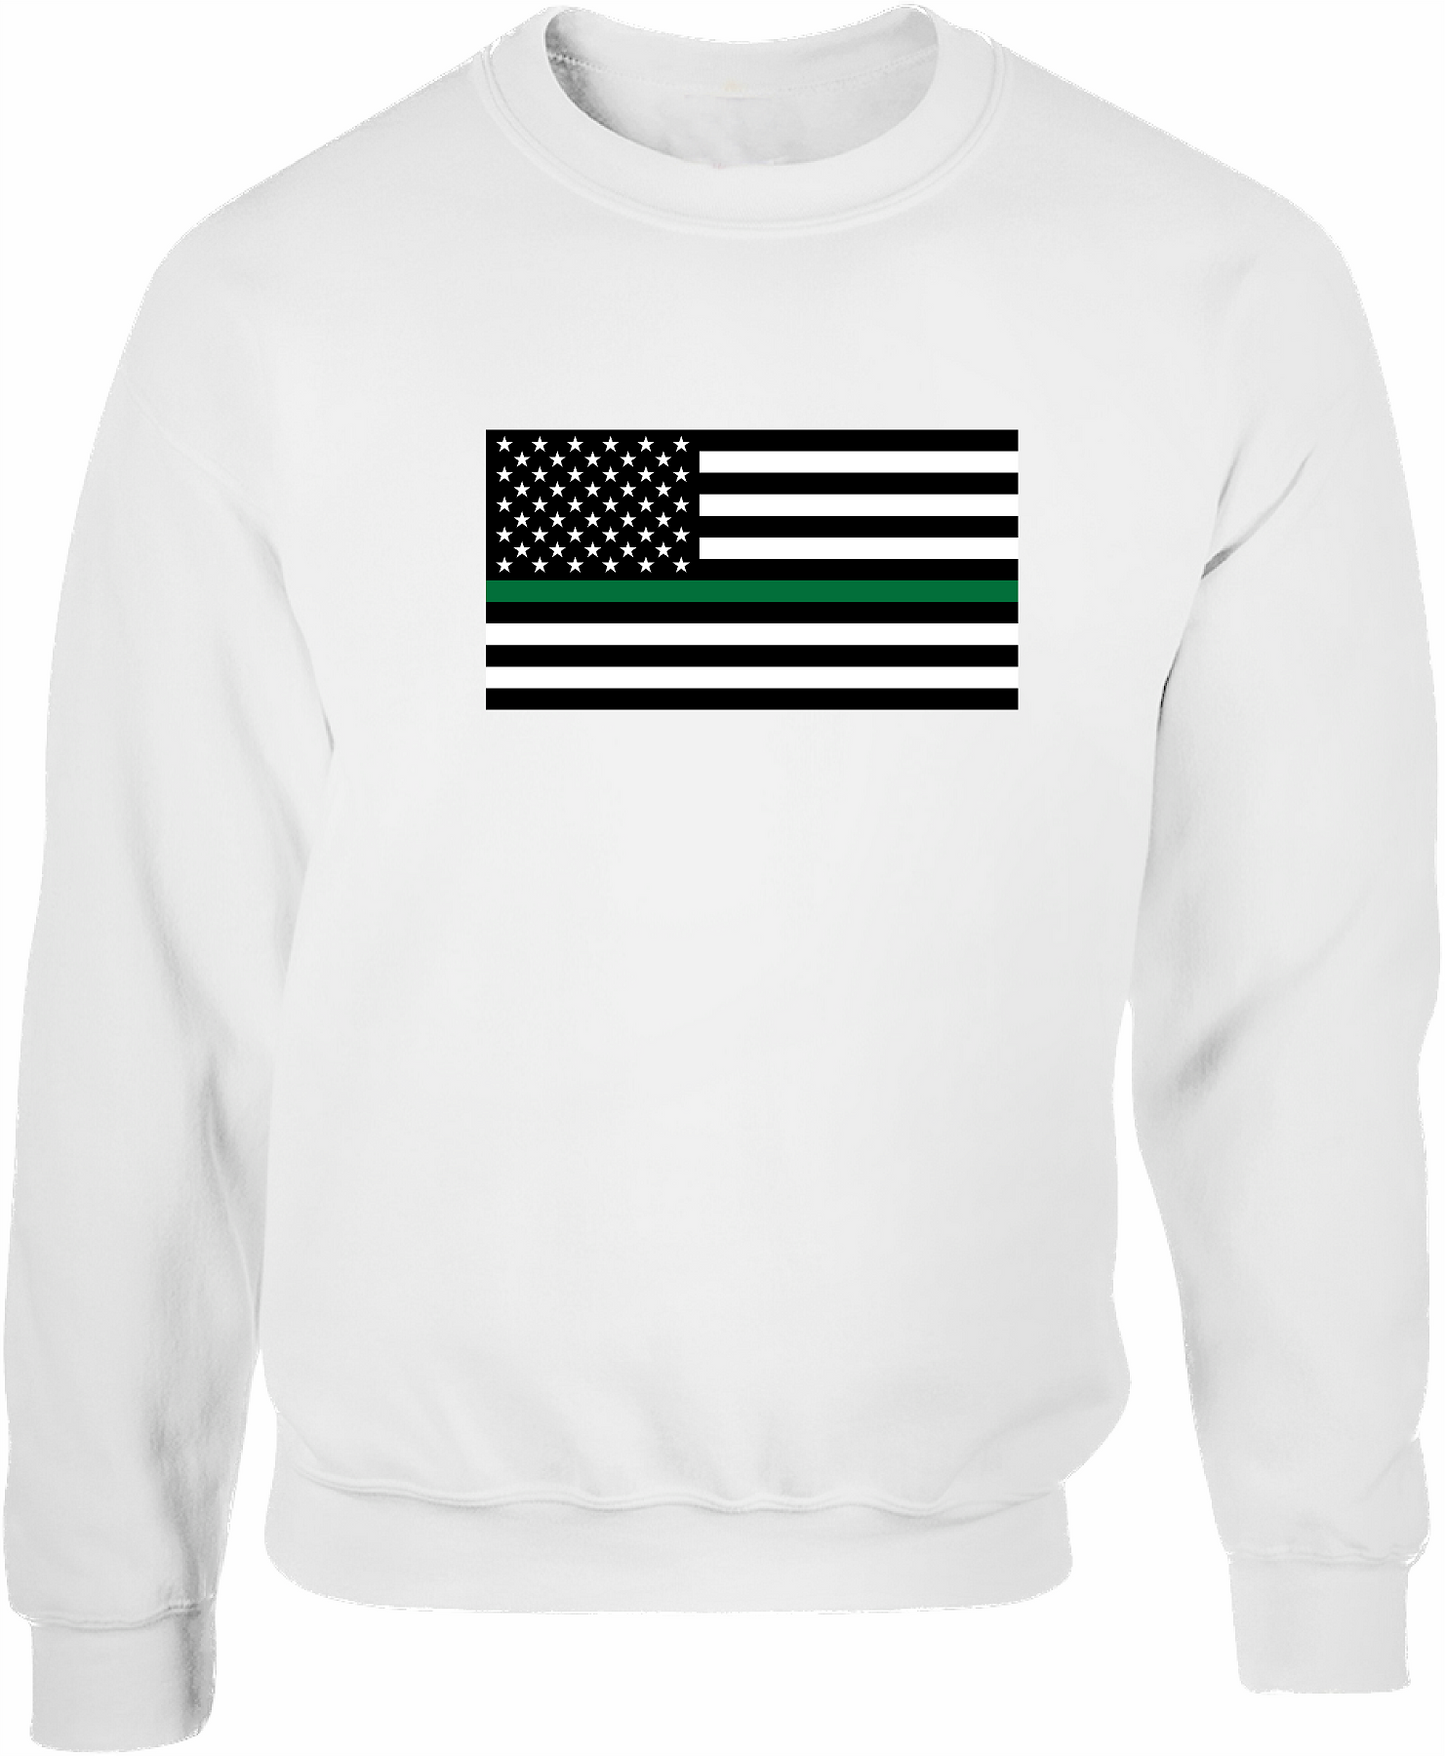 Thin Green Line American Flag Crewneck Sweatshirt